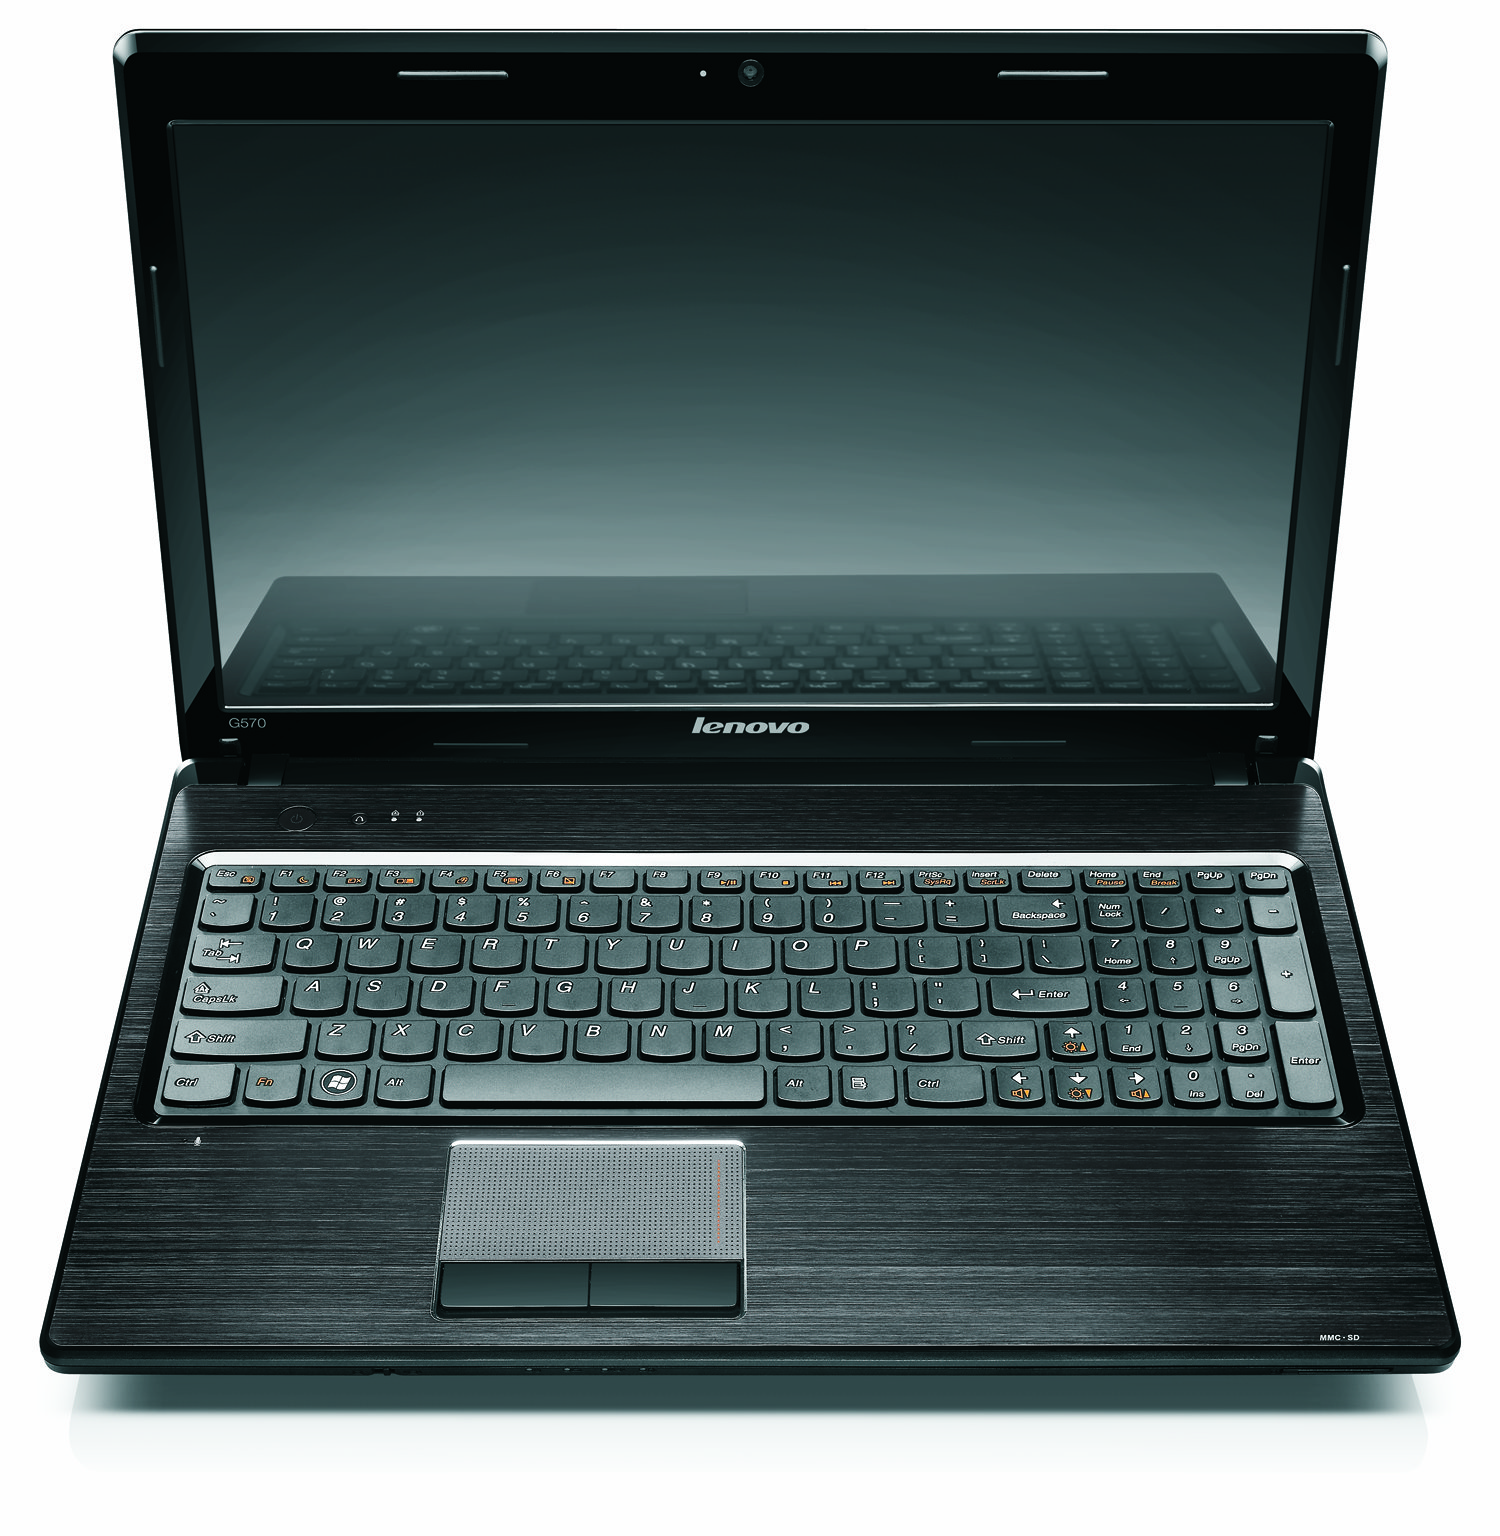 Lenovo G570 Notebook0